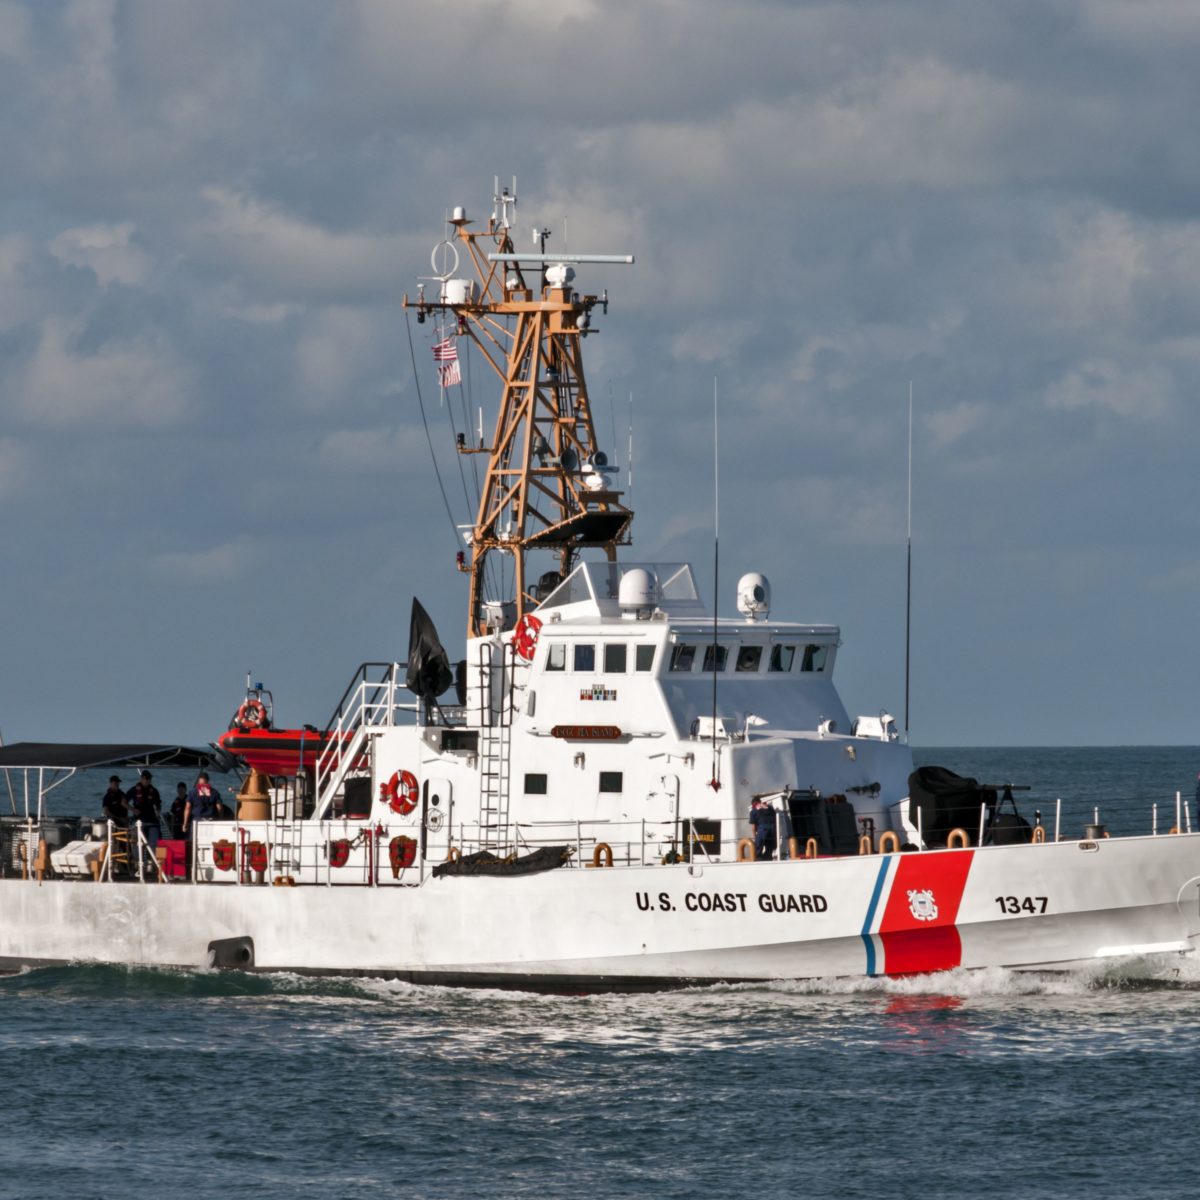 Nearly $400 Million Worth of Cocaine and Marijuana is Seized by U.S. Coast Guard